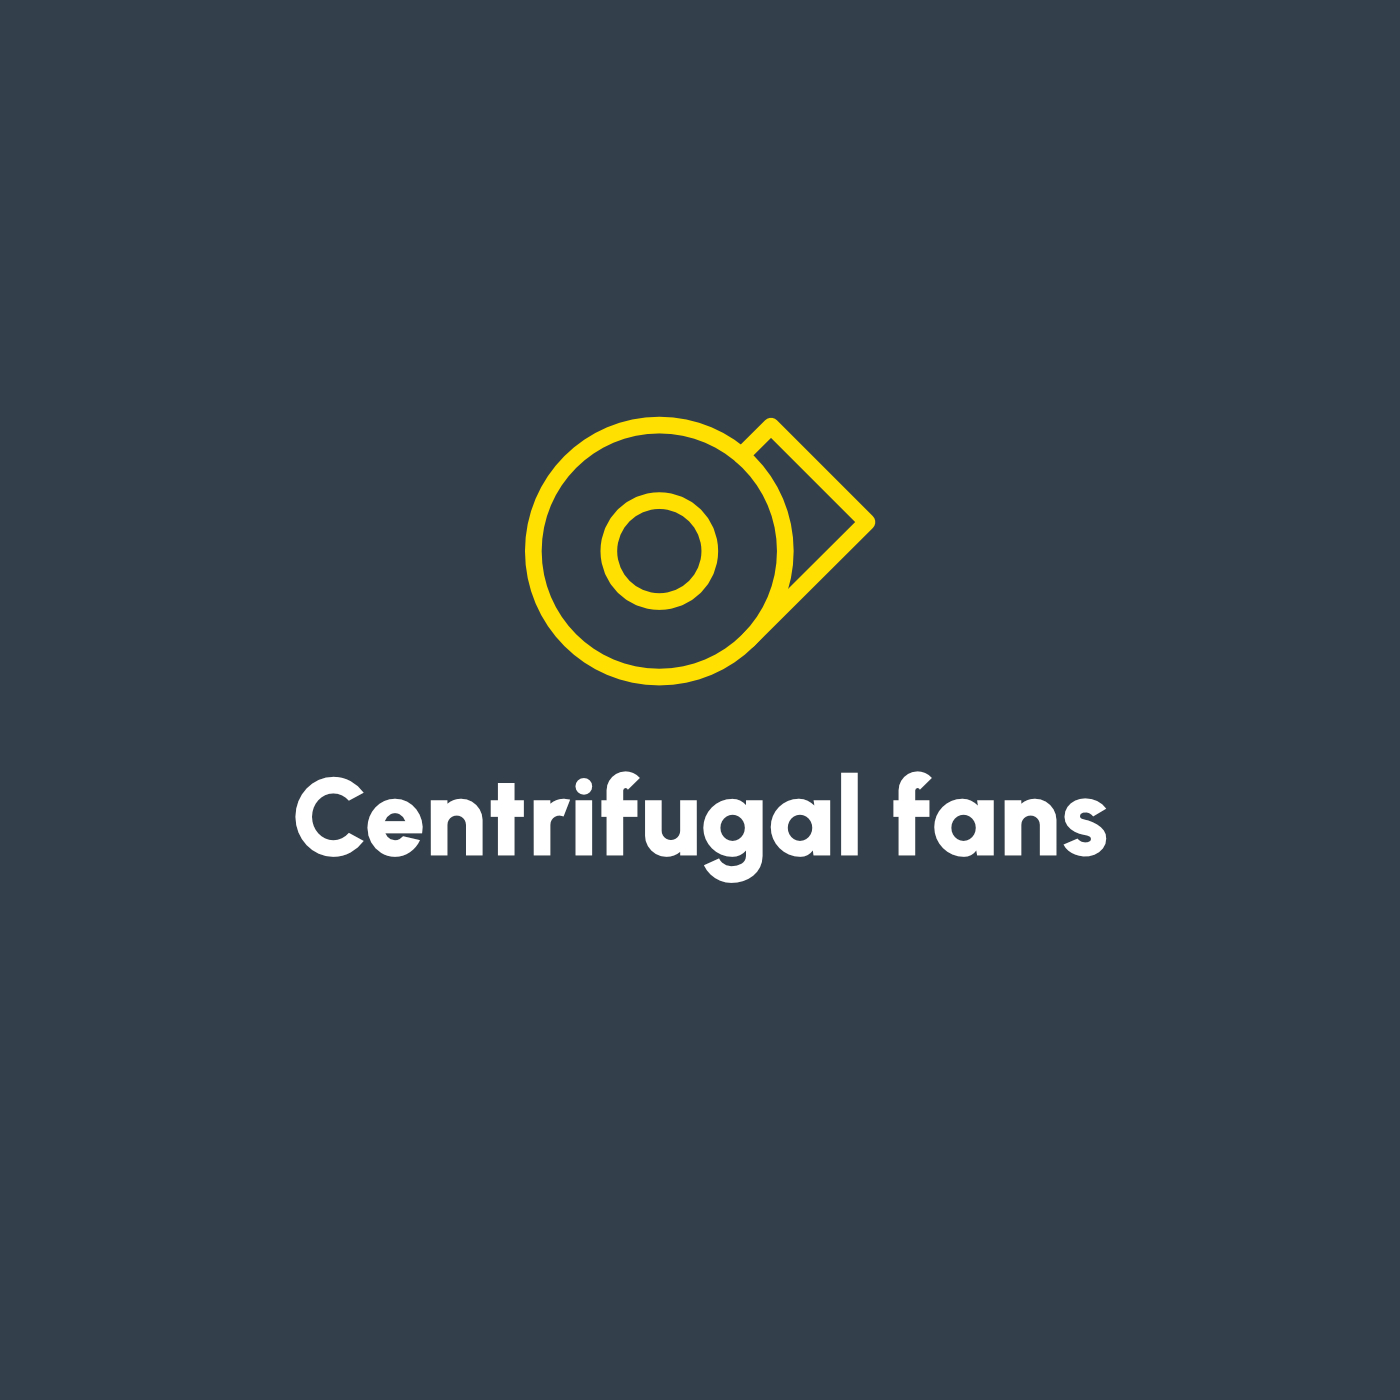 Centrifugal fans